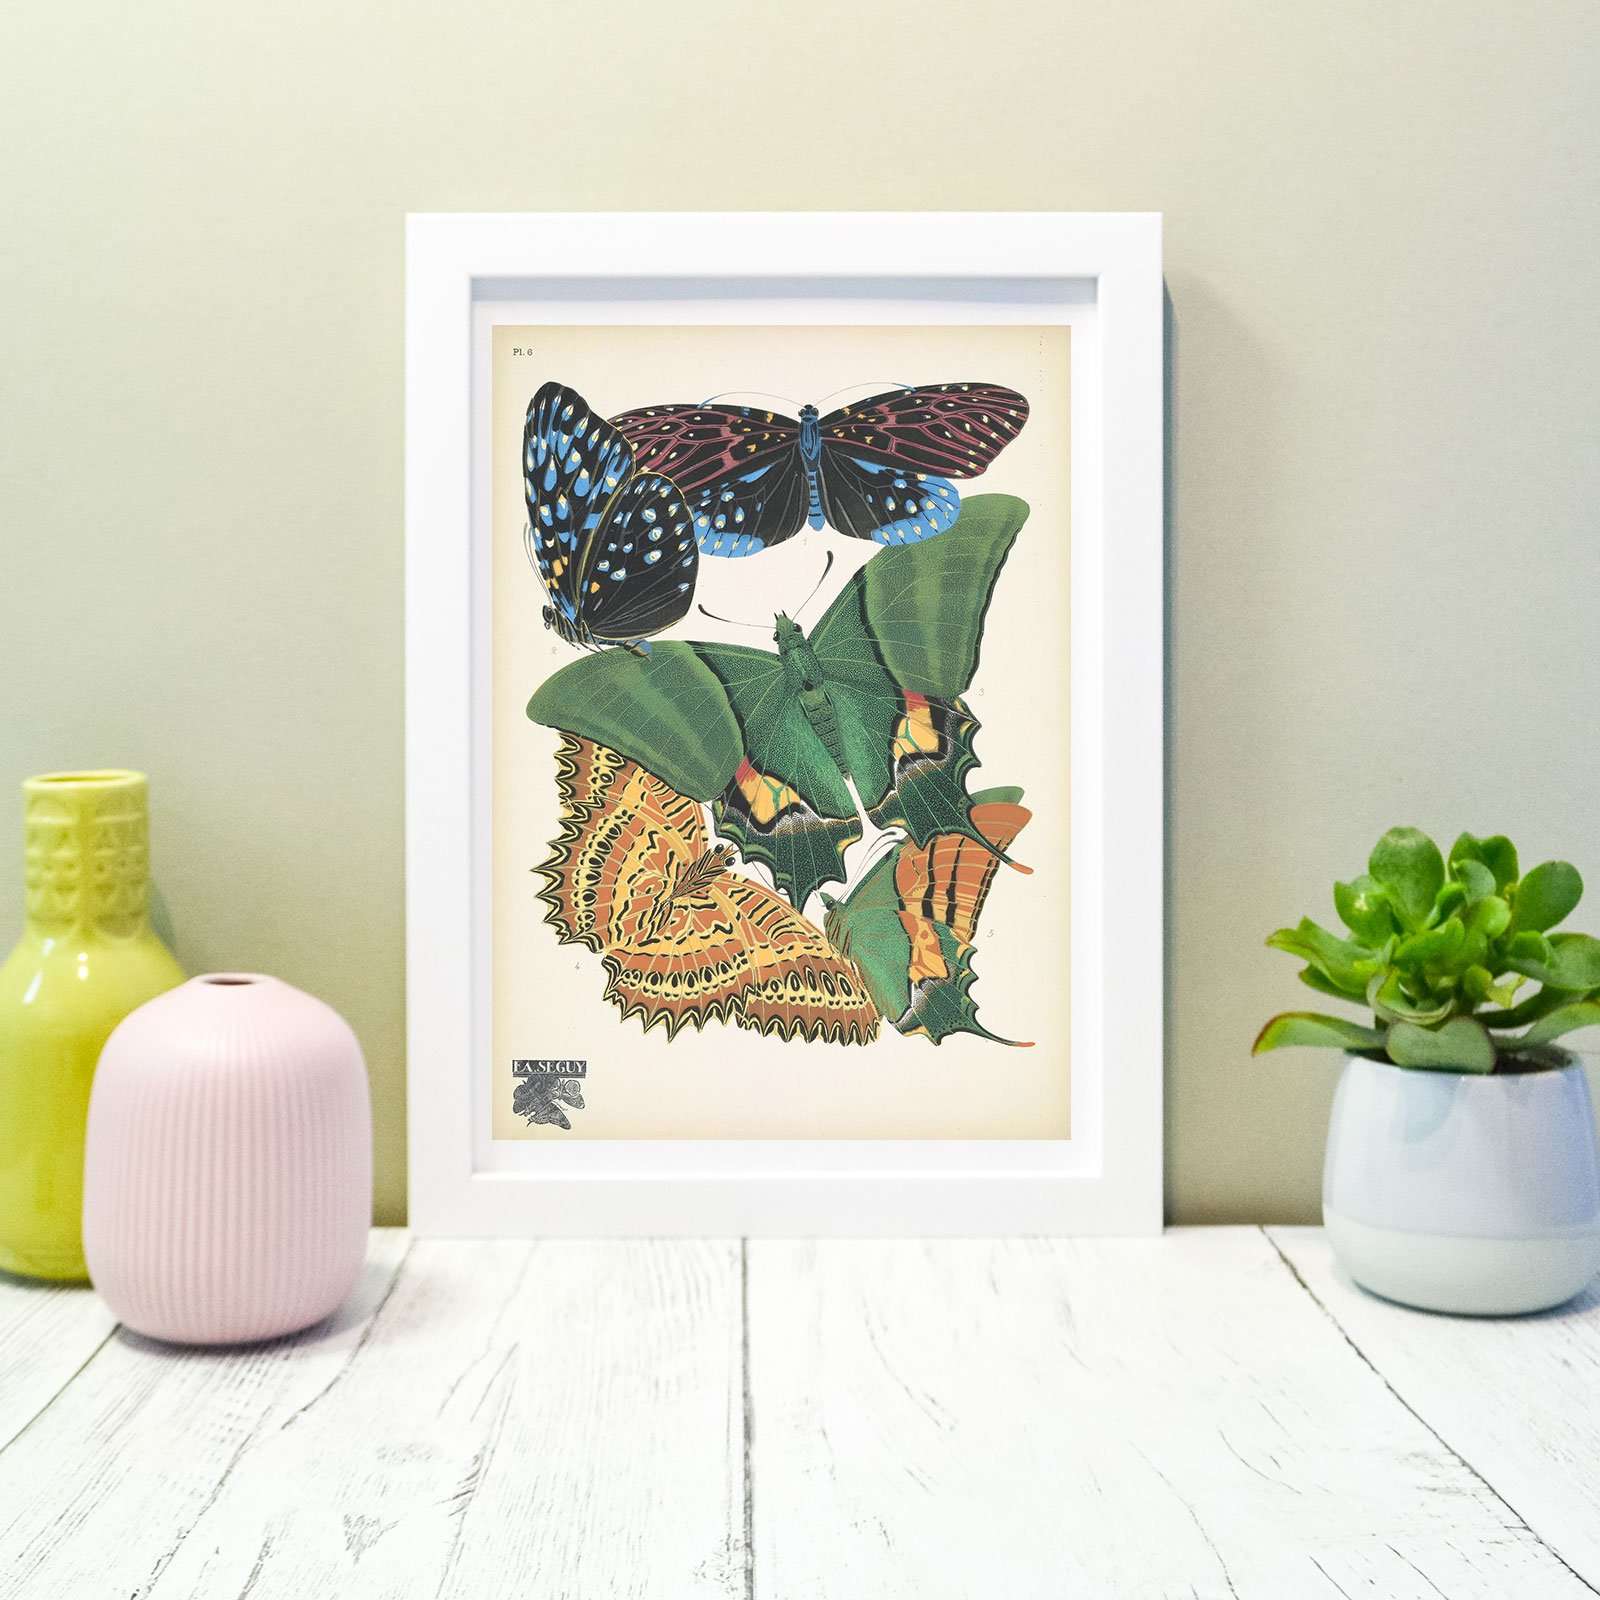 Sef of 6 vintage butterflies natural history prints 2 Vintage Animal Prints